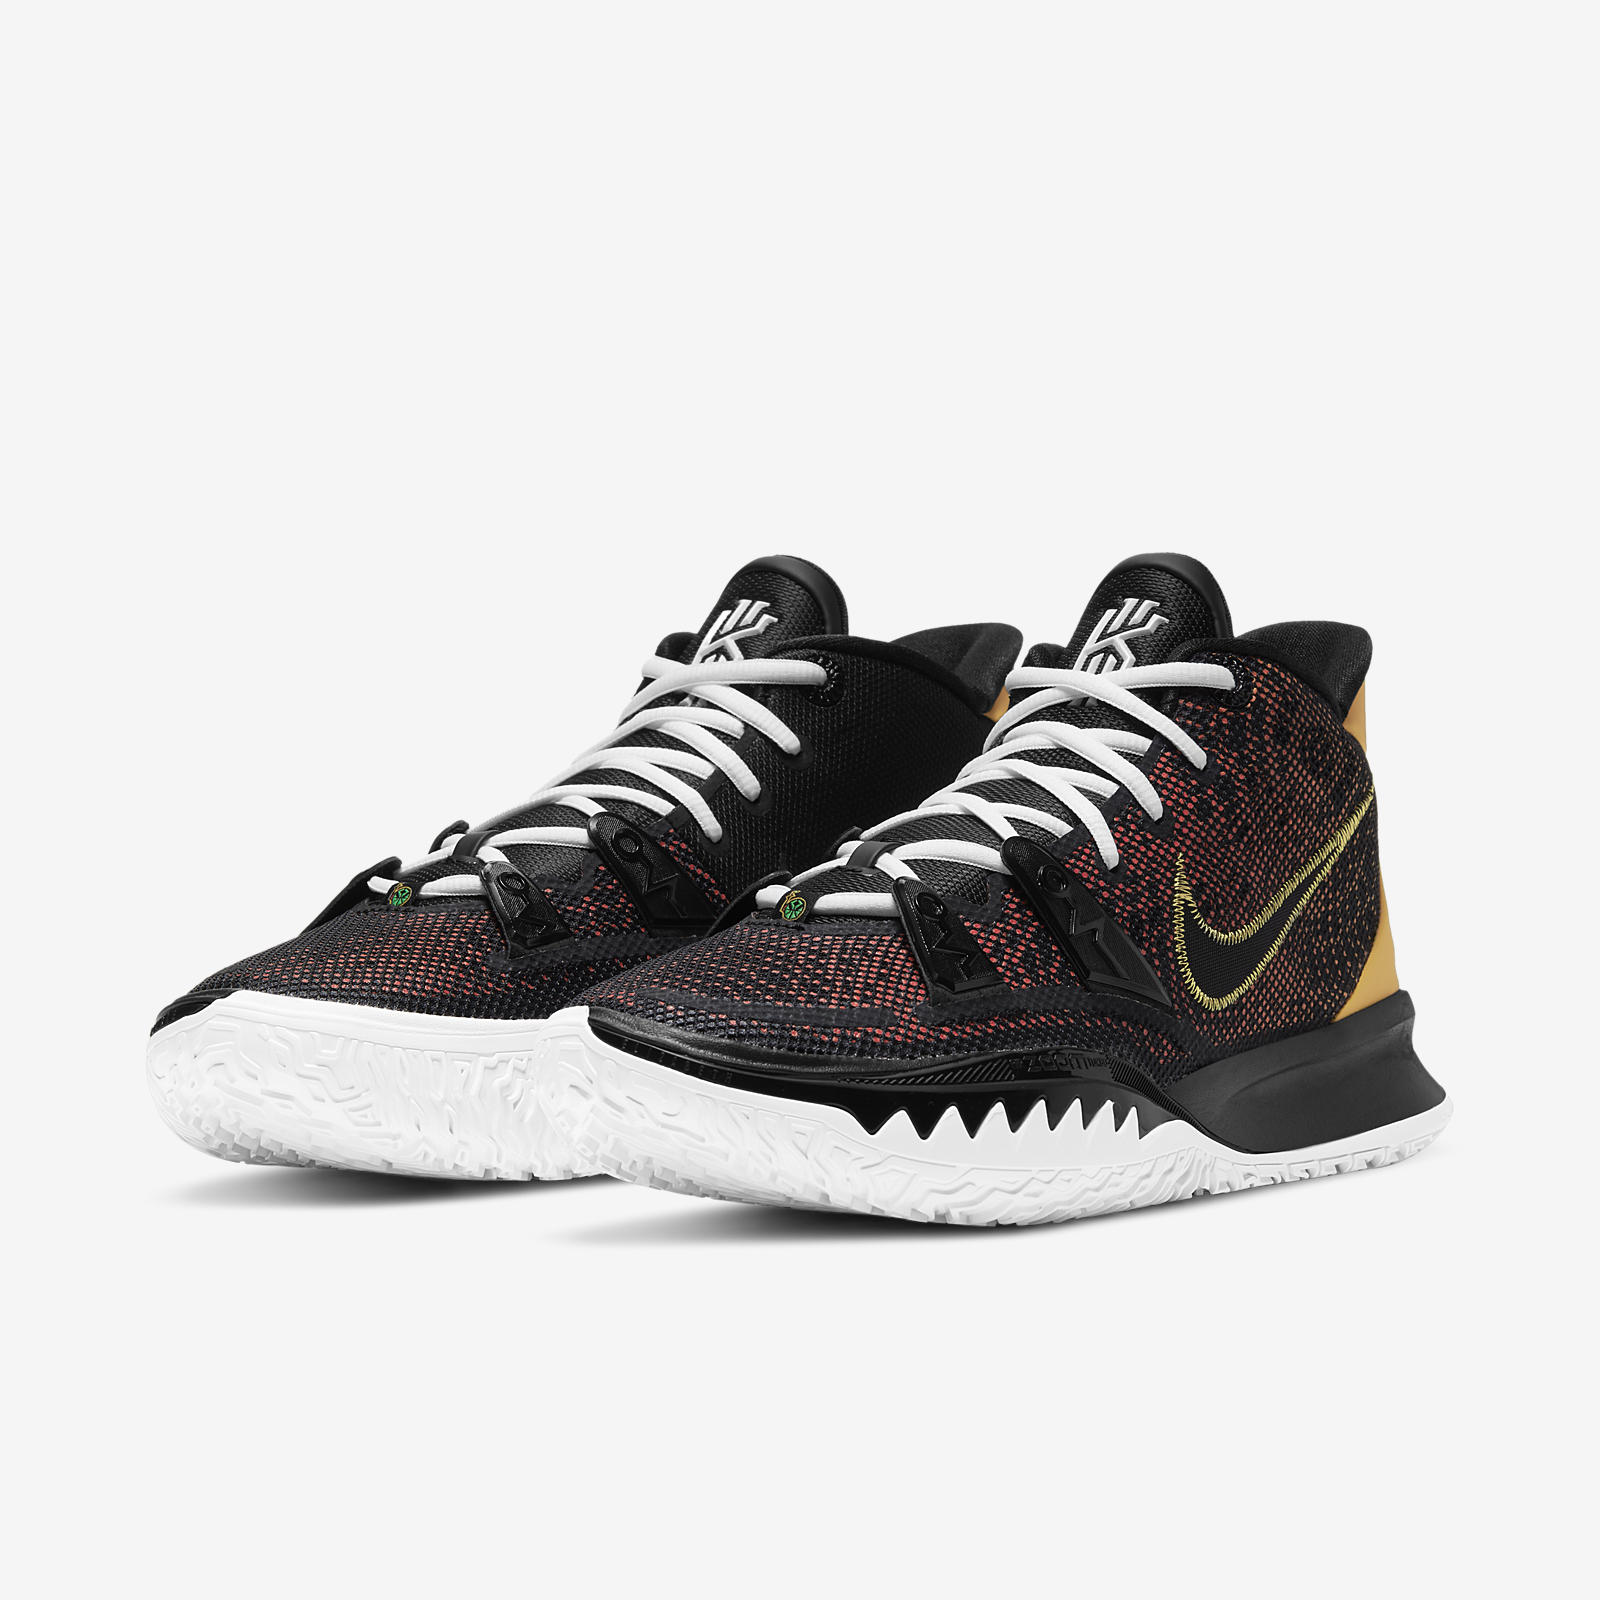 Nike Kyrie 7
« Rayguns »